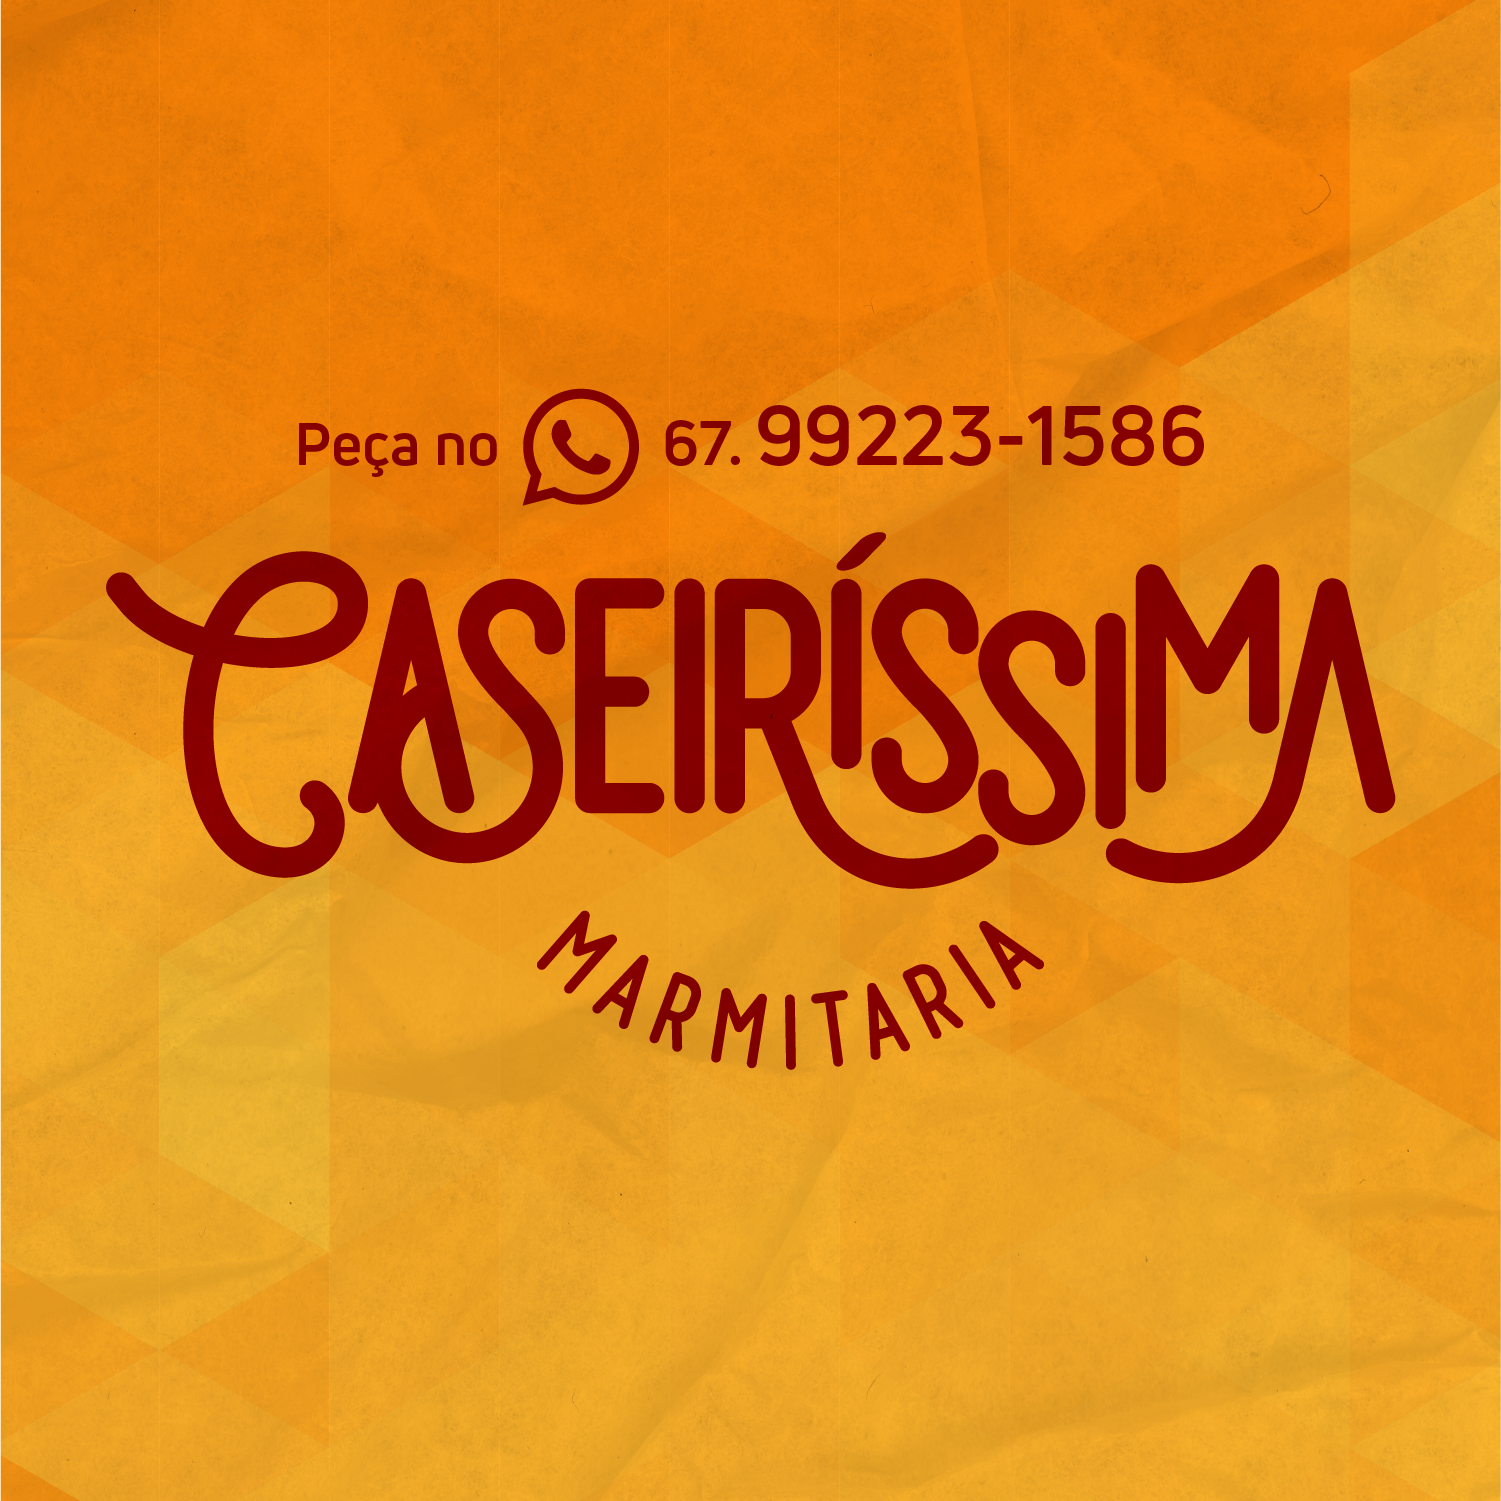 Logo-Restaurante - caseirissima marmitaria